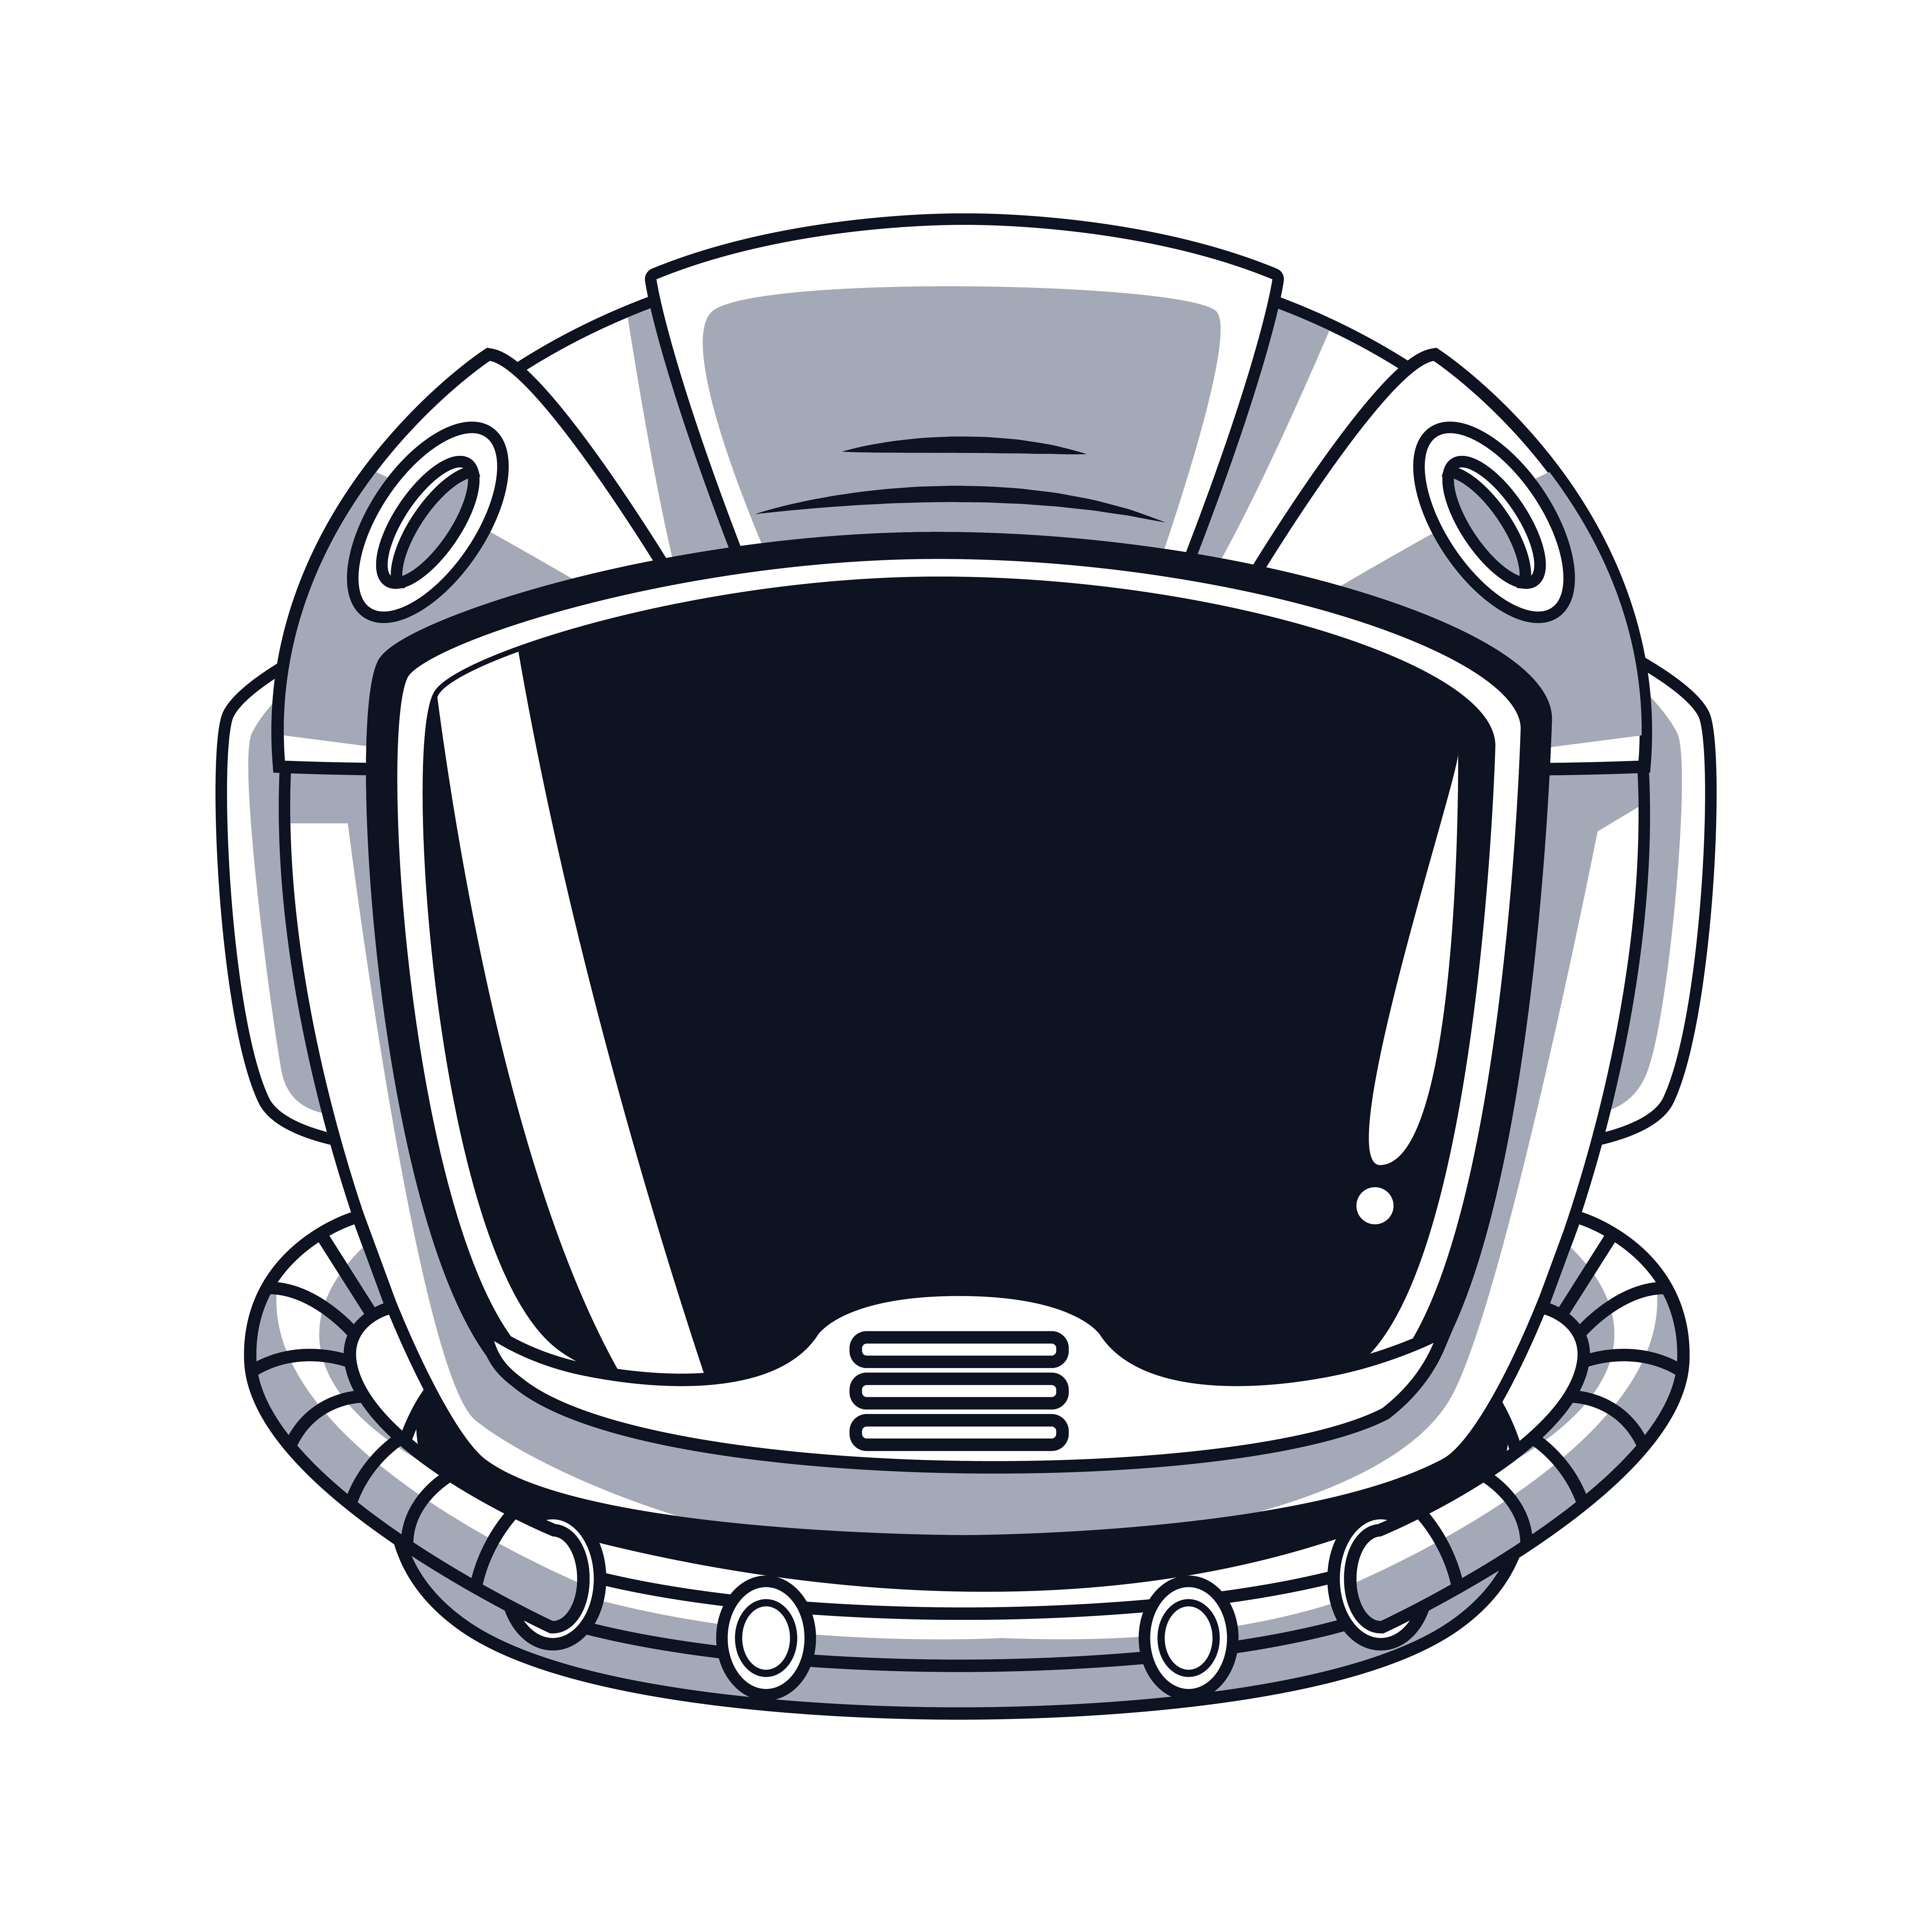 casco da astronauta disegnato 2498620 Arte vettoriale a Vecteezy